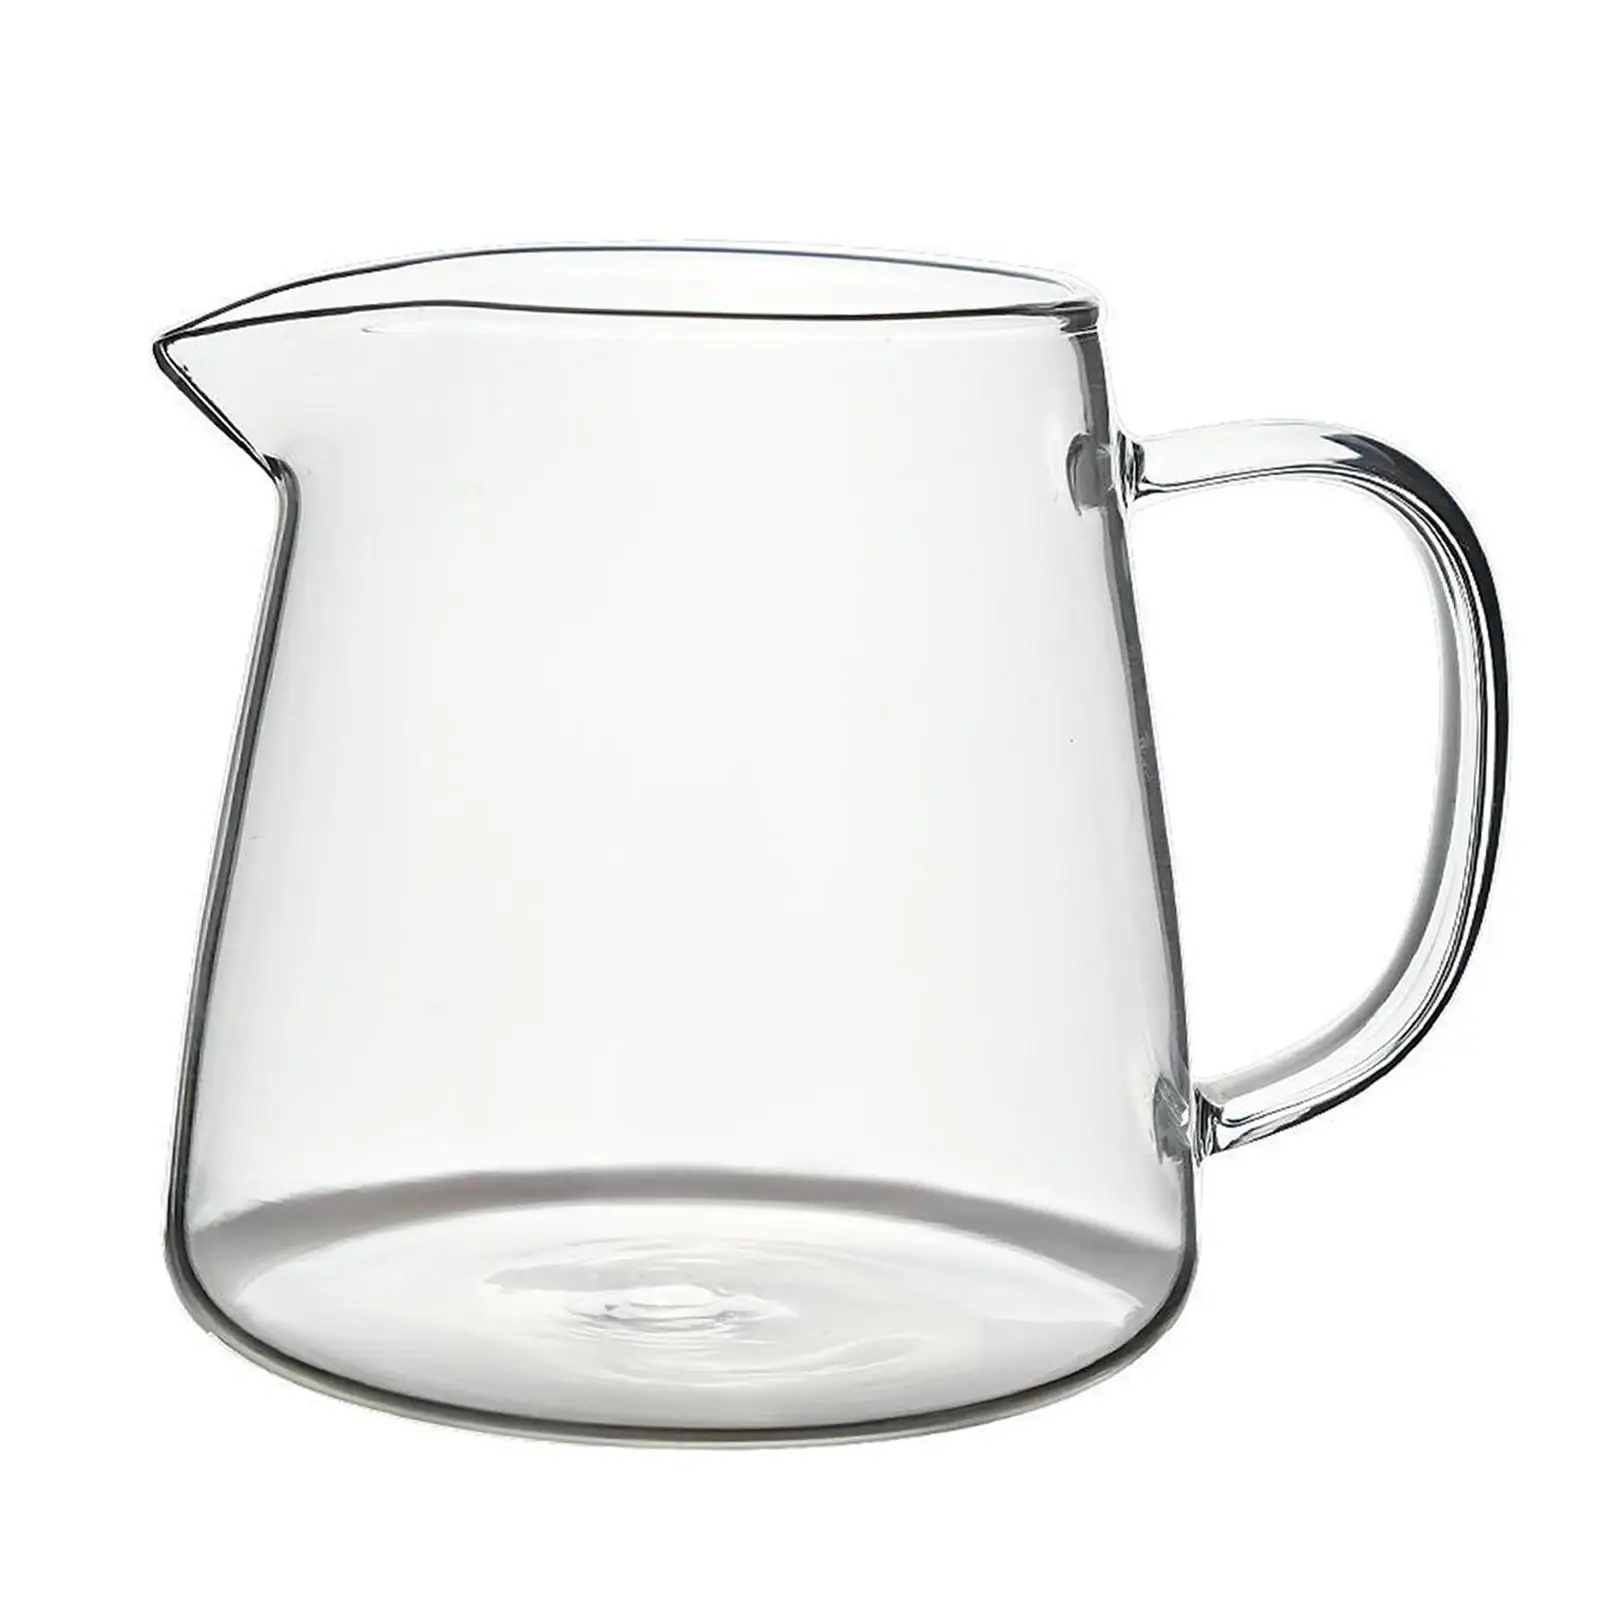 17oz Glass Teapot Heatproof Comfortable Handle Clear Kettle Blooming Tea Pot for Flower Tea Milk Juice Coffee Loose Leaf